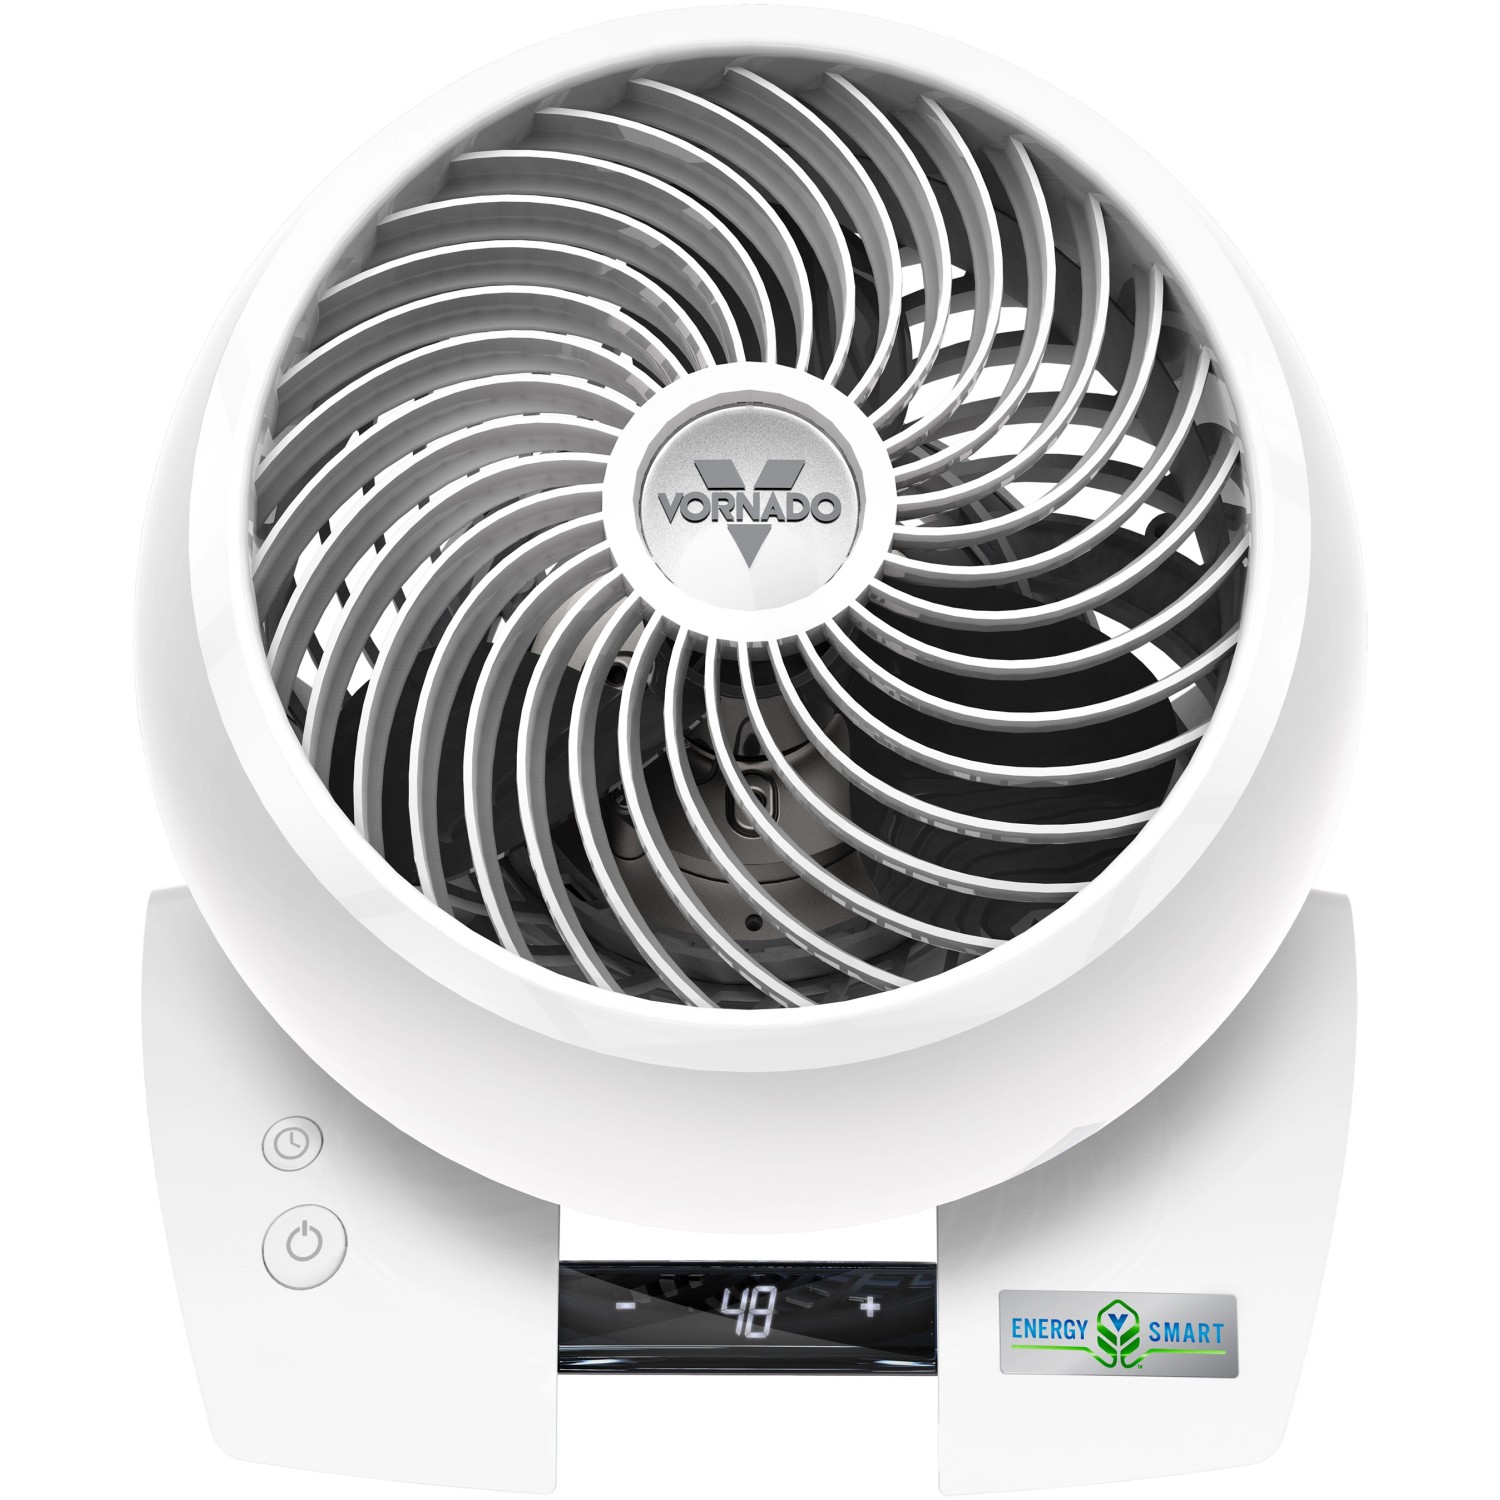 Vornado Ventilator Energy Smart 6303DC von Vornado